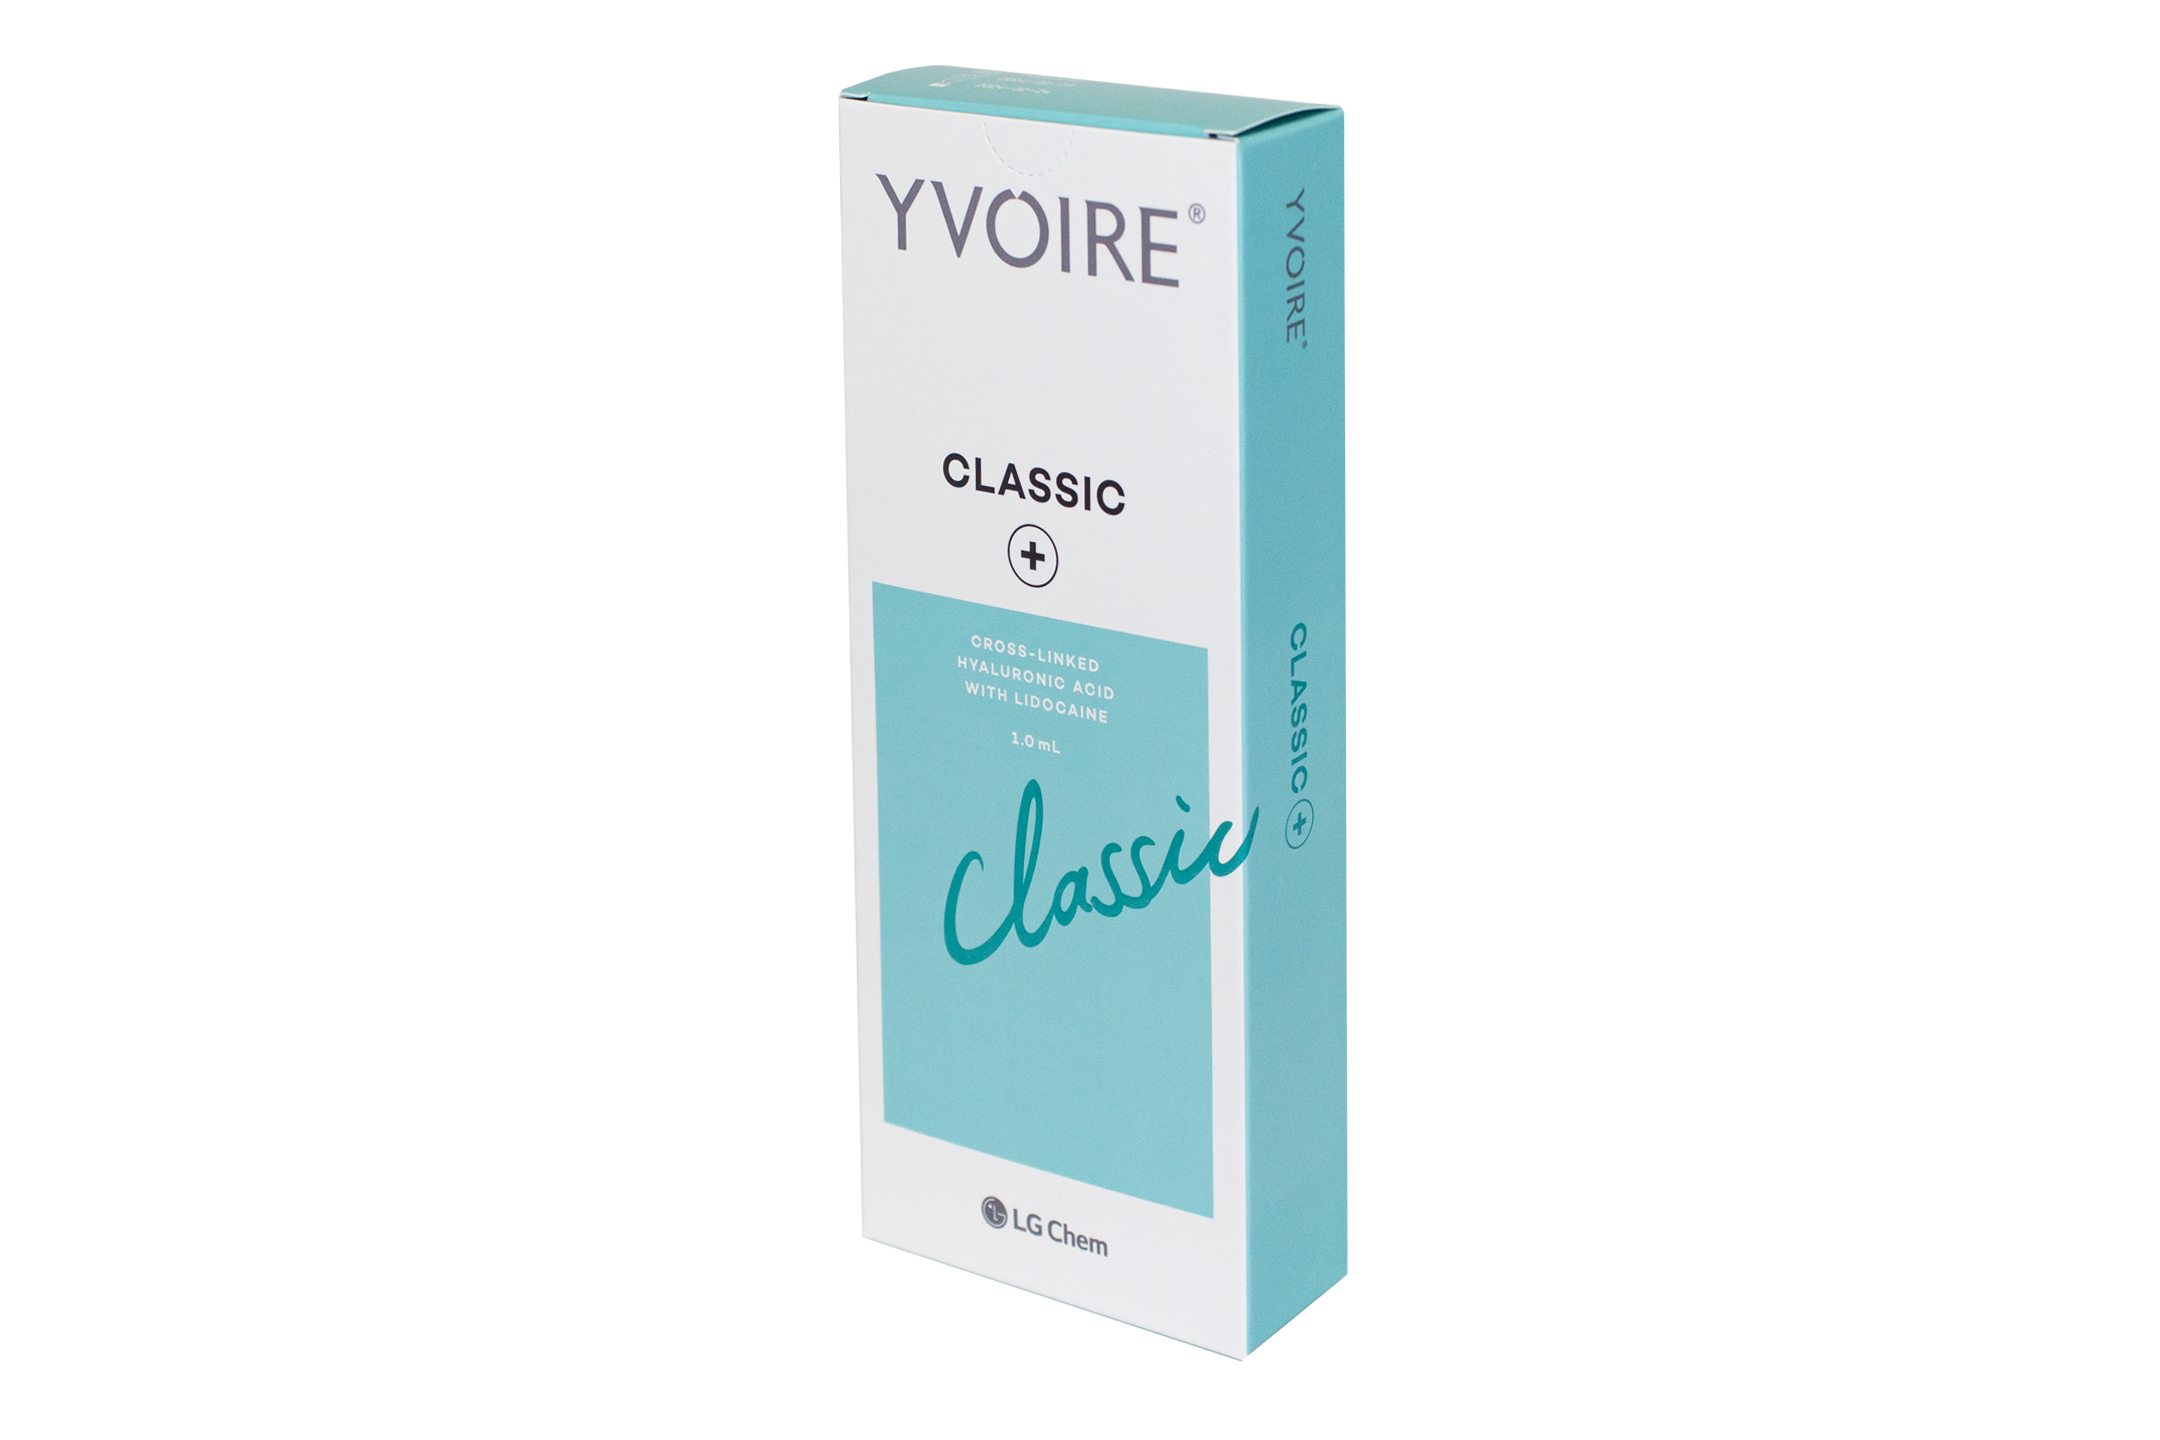 YVOIRE Classic Plus Side